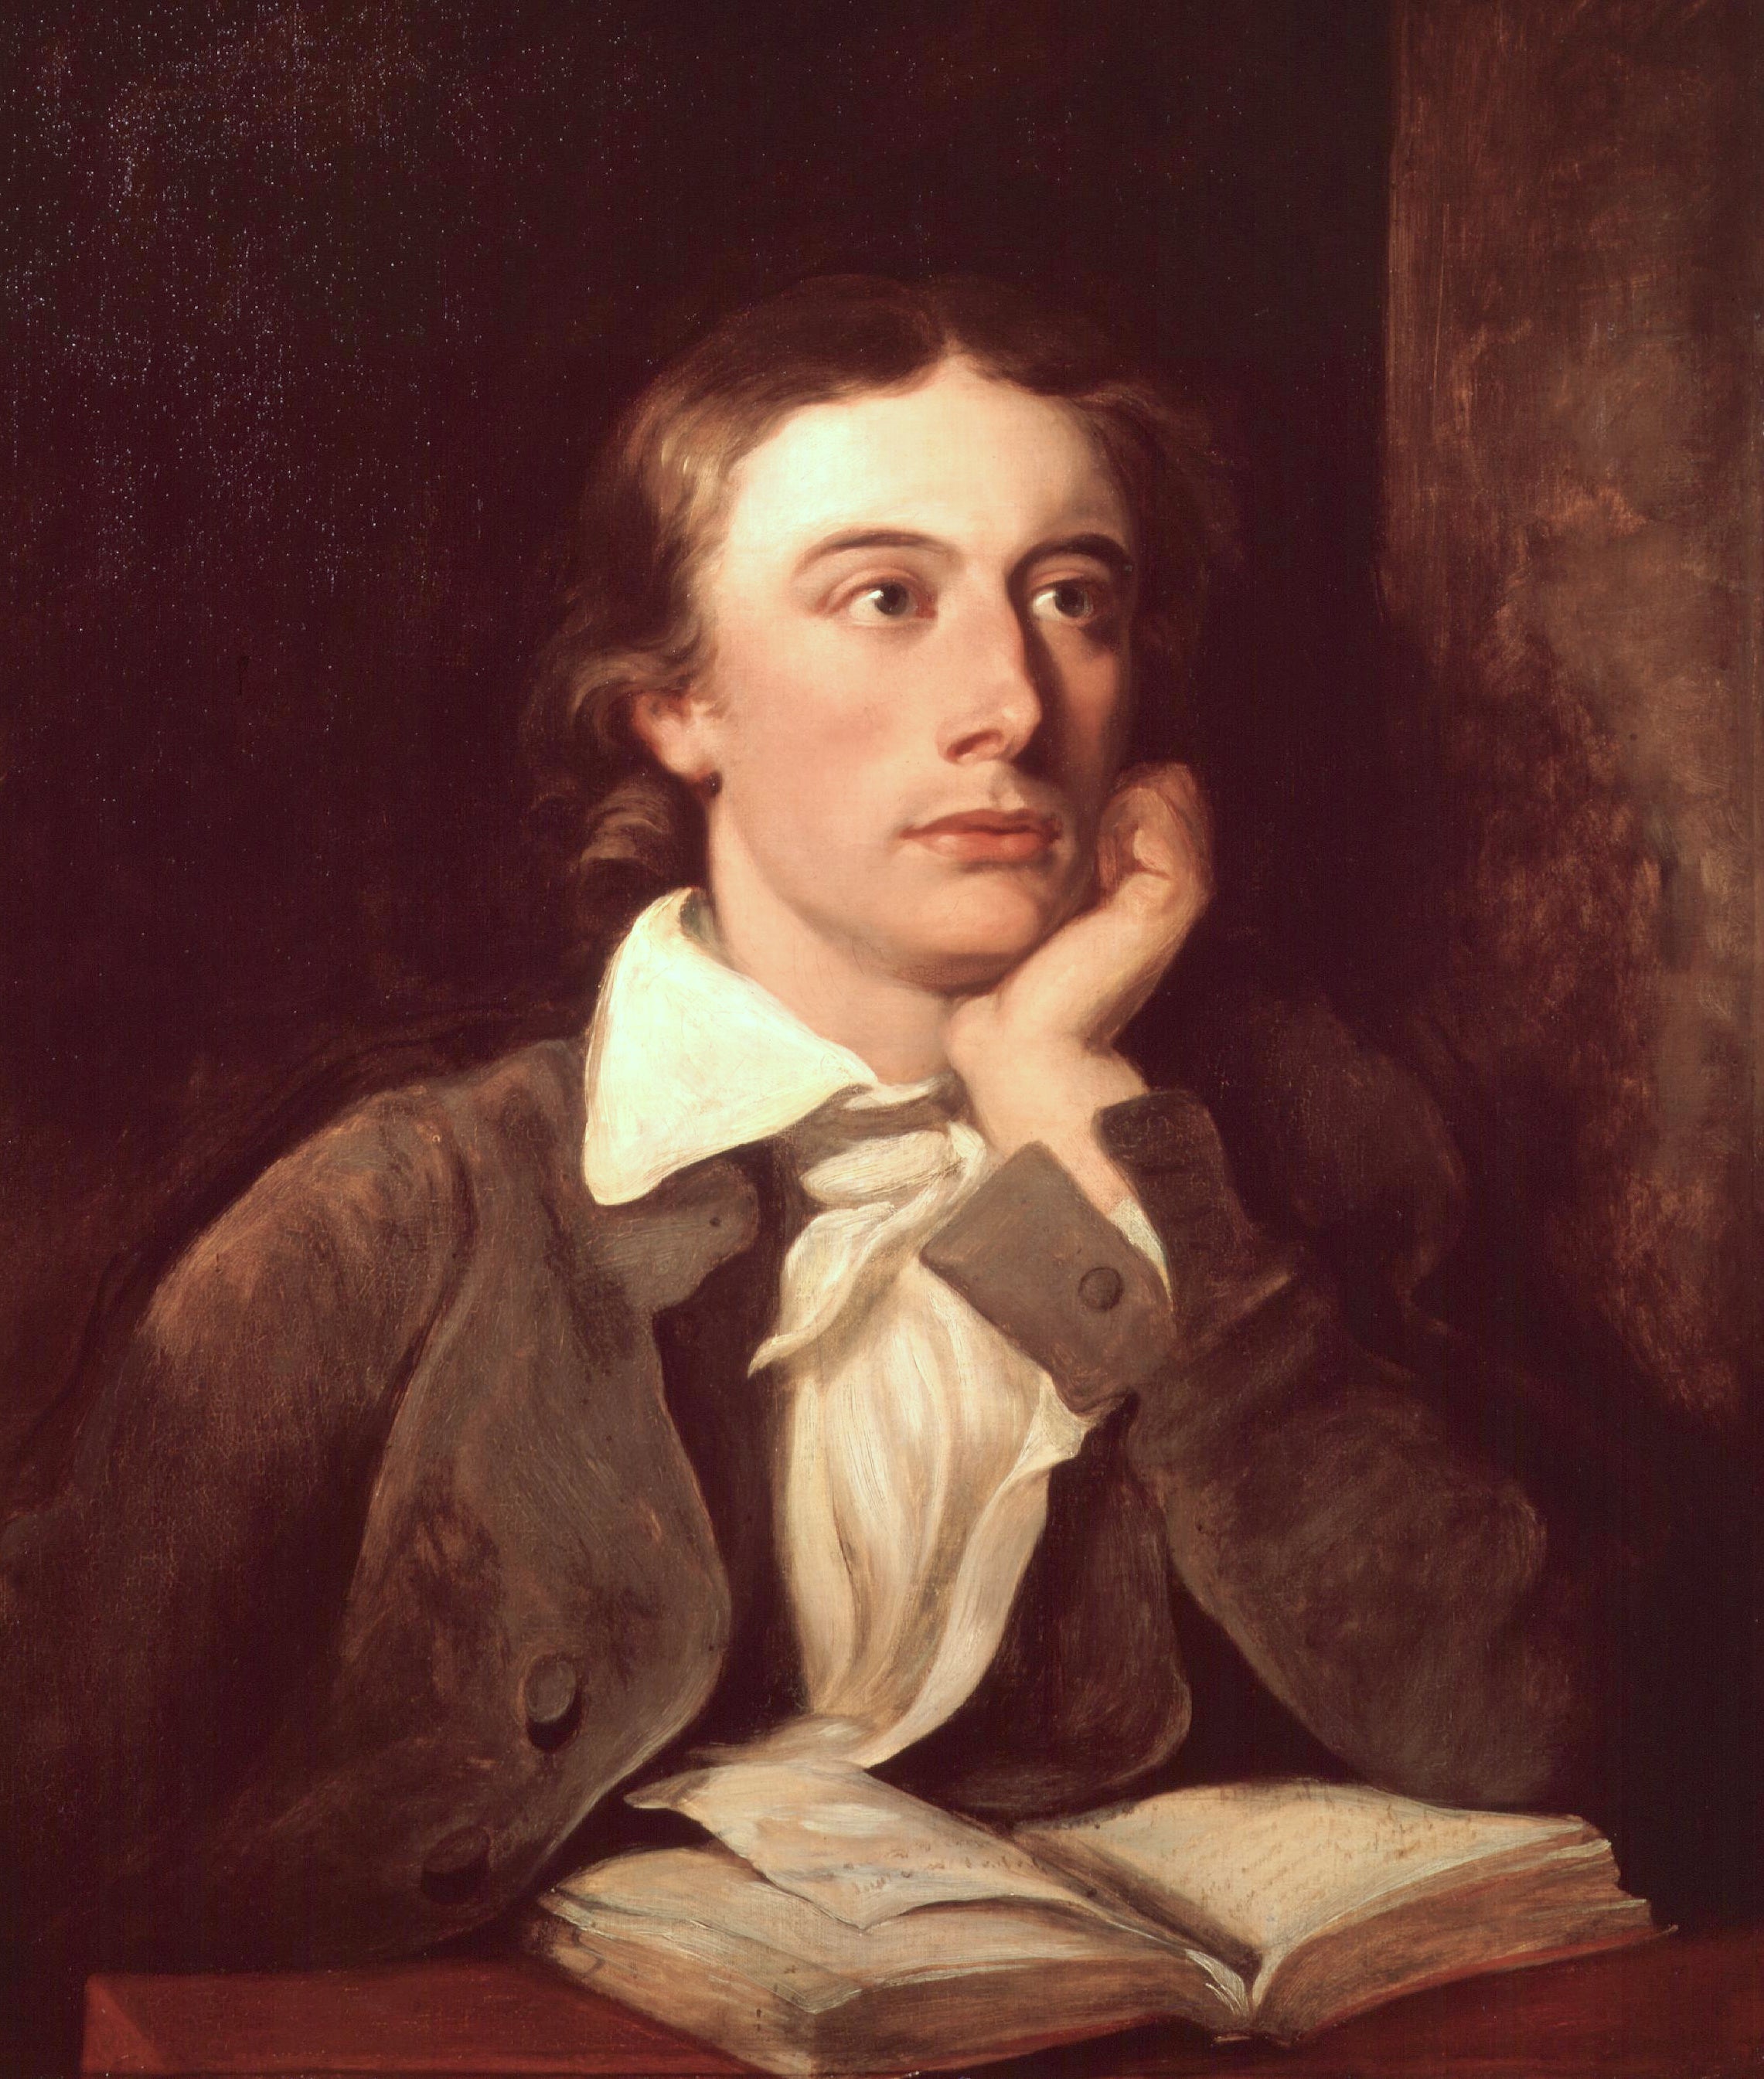 Photo of John Keats